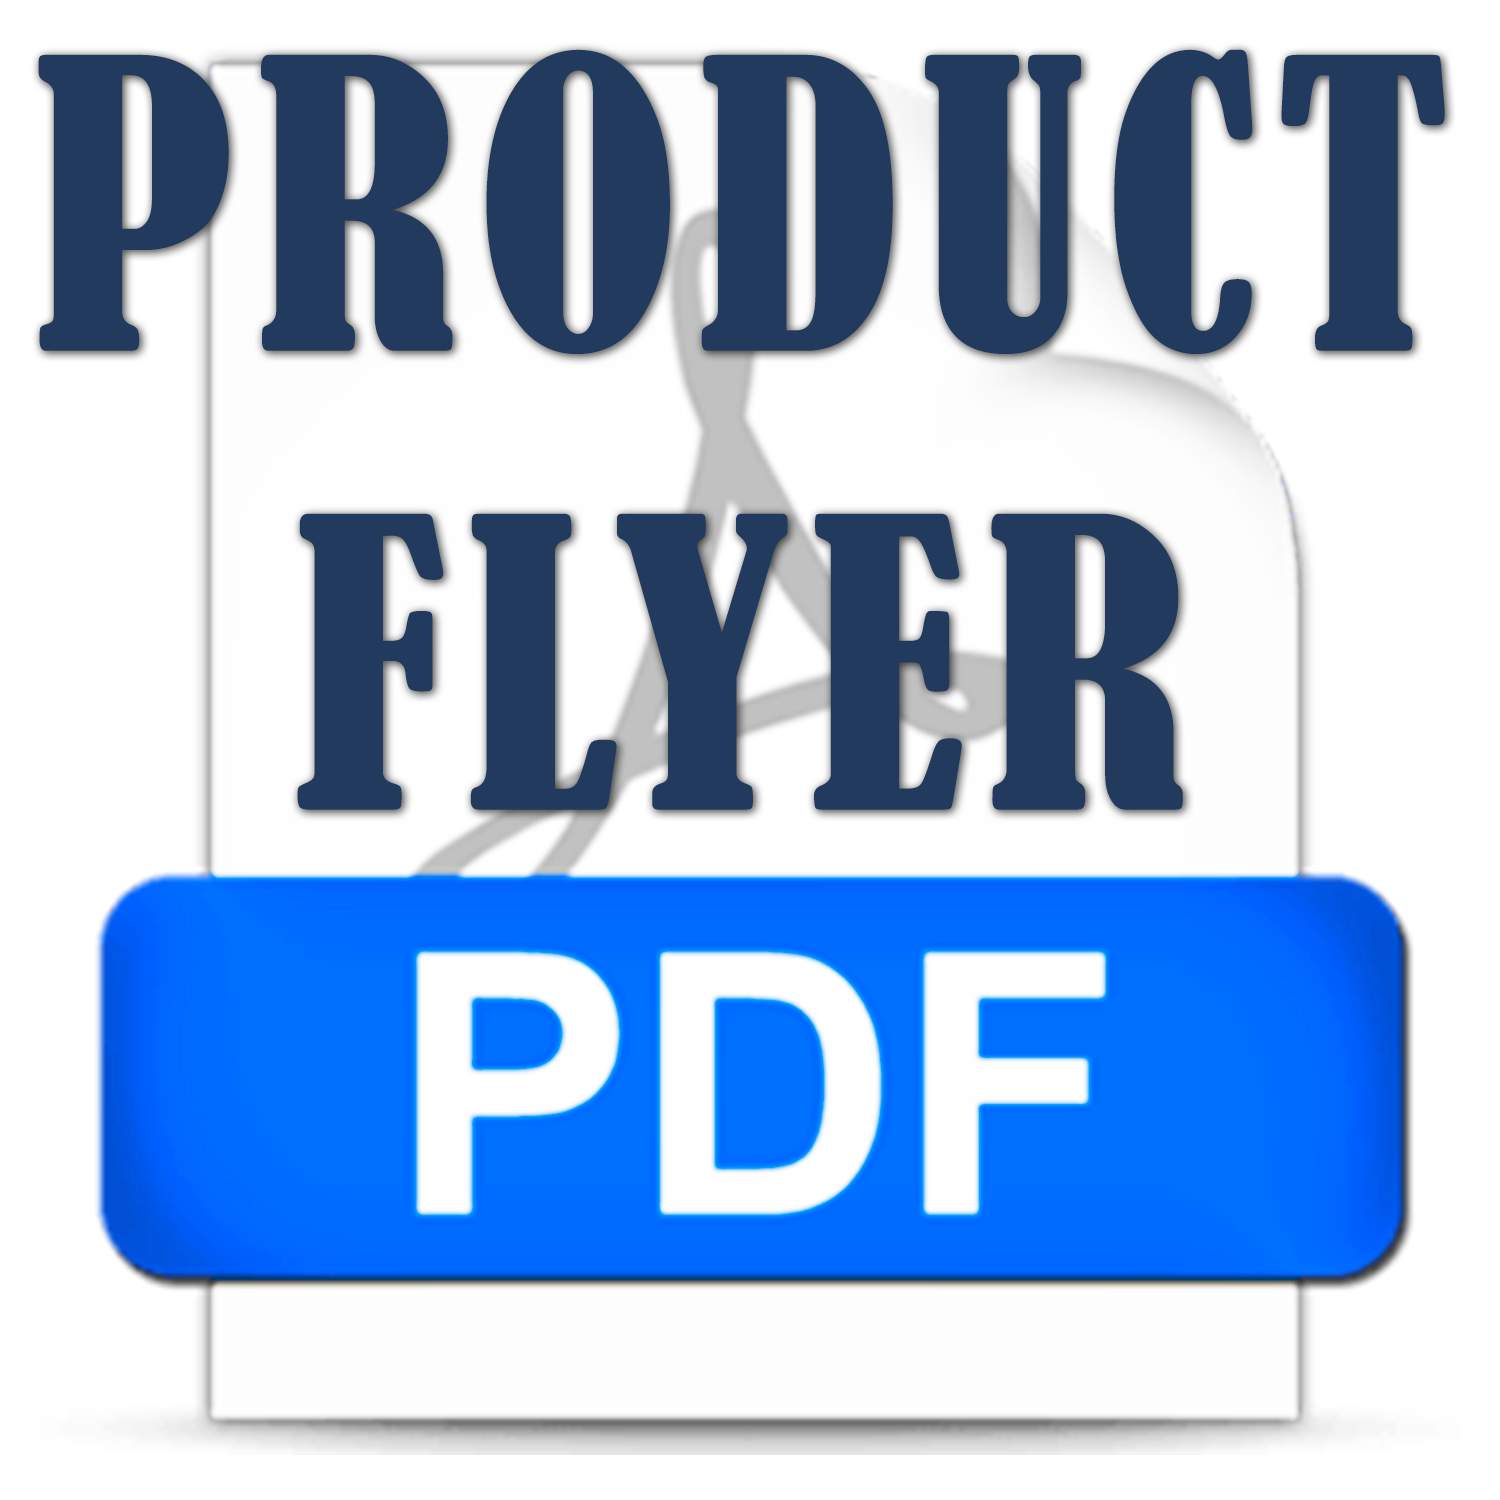 673 product image pdf